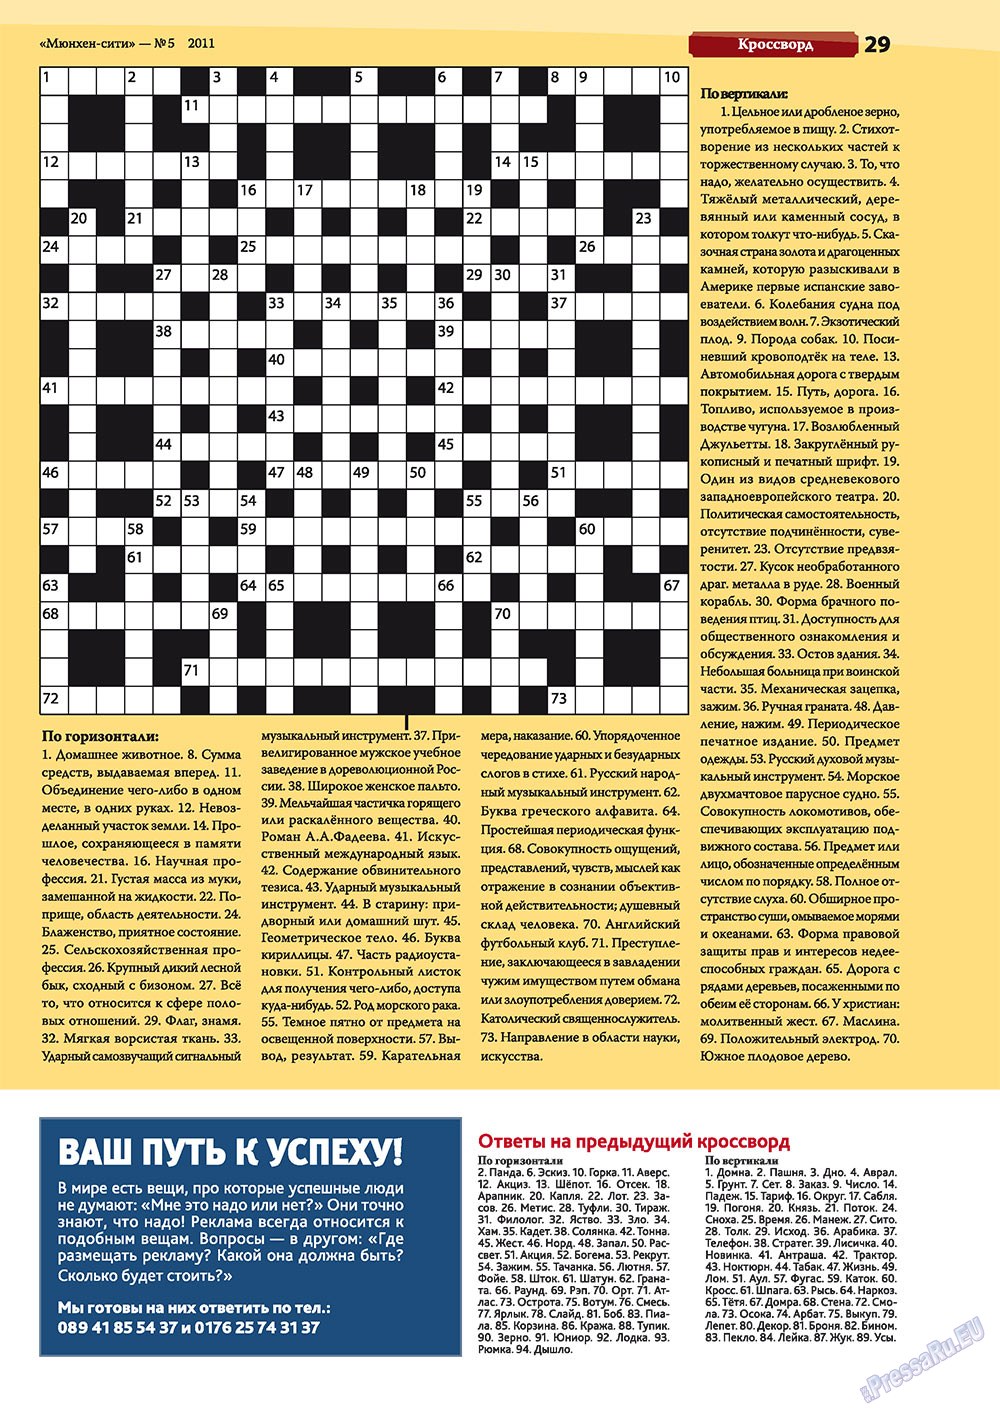 Мюнхен-сити, журнал. 2011 №5 стр.29